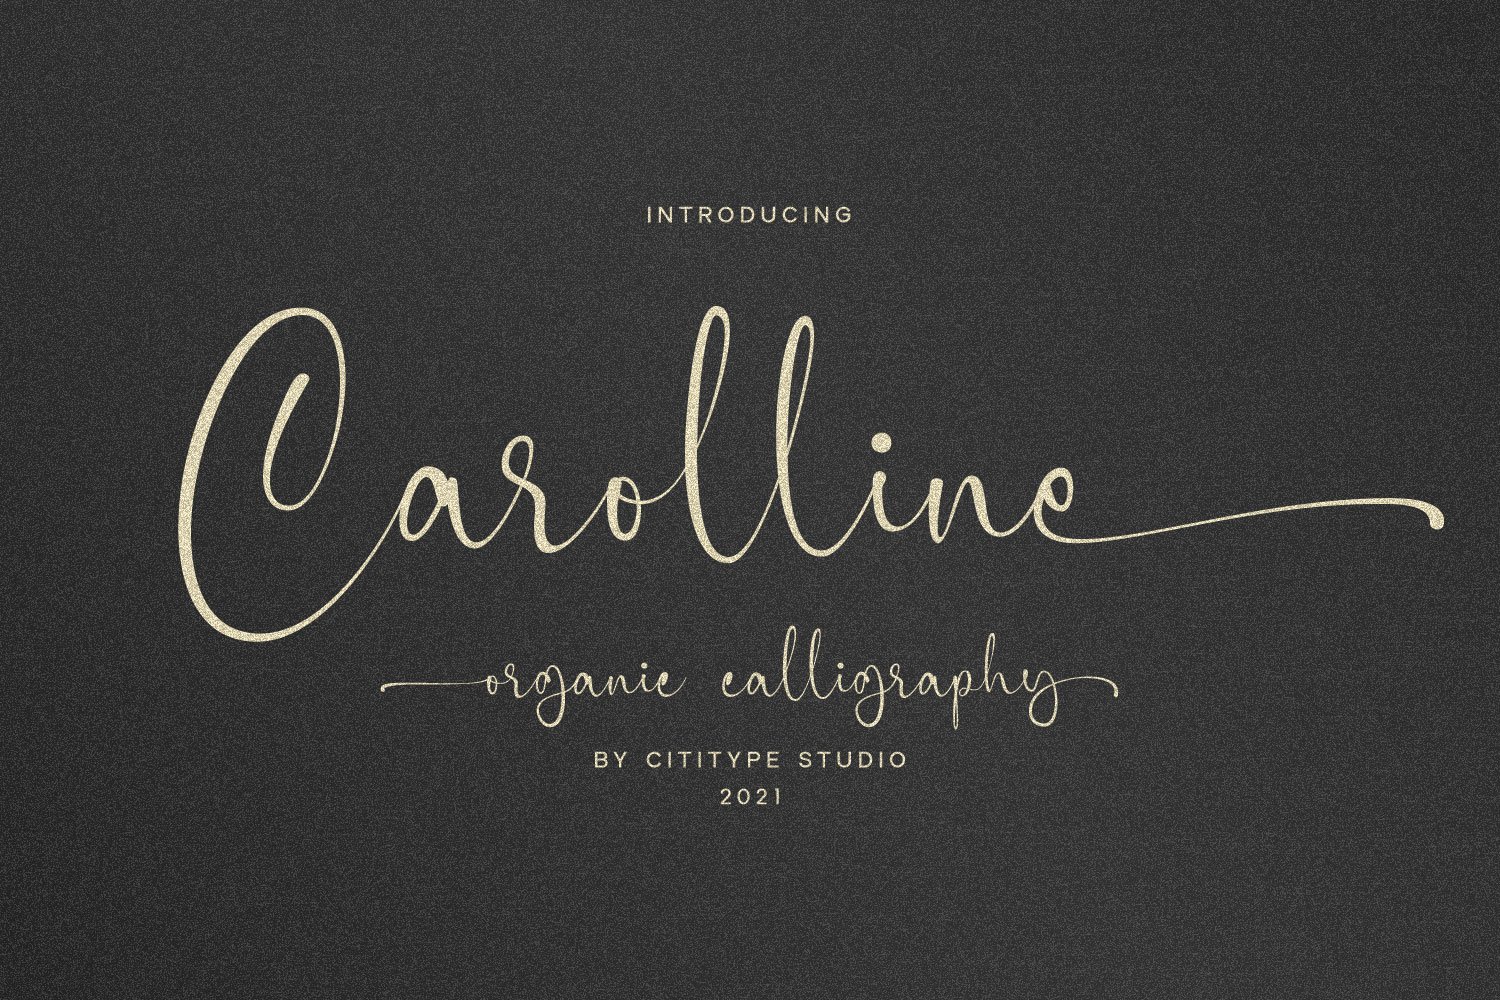 Carolline - Modern And Organic Calligraphy Font